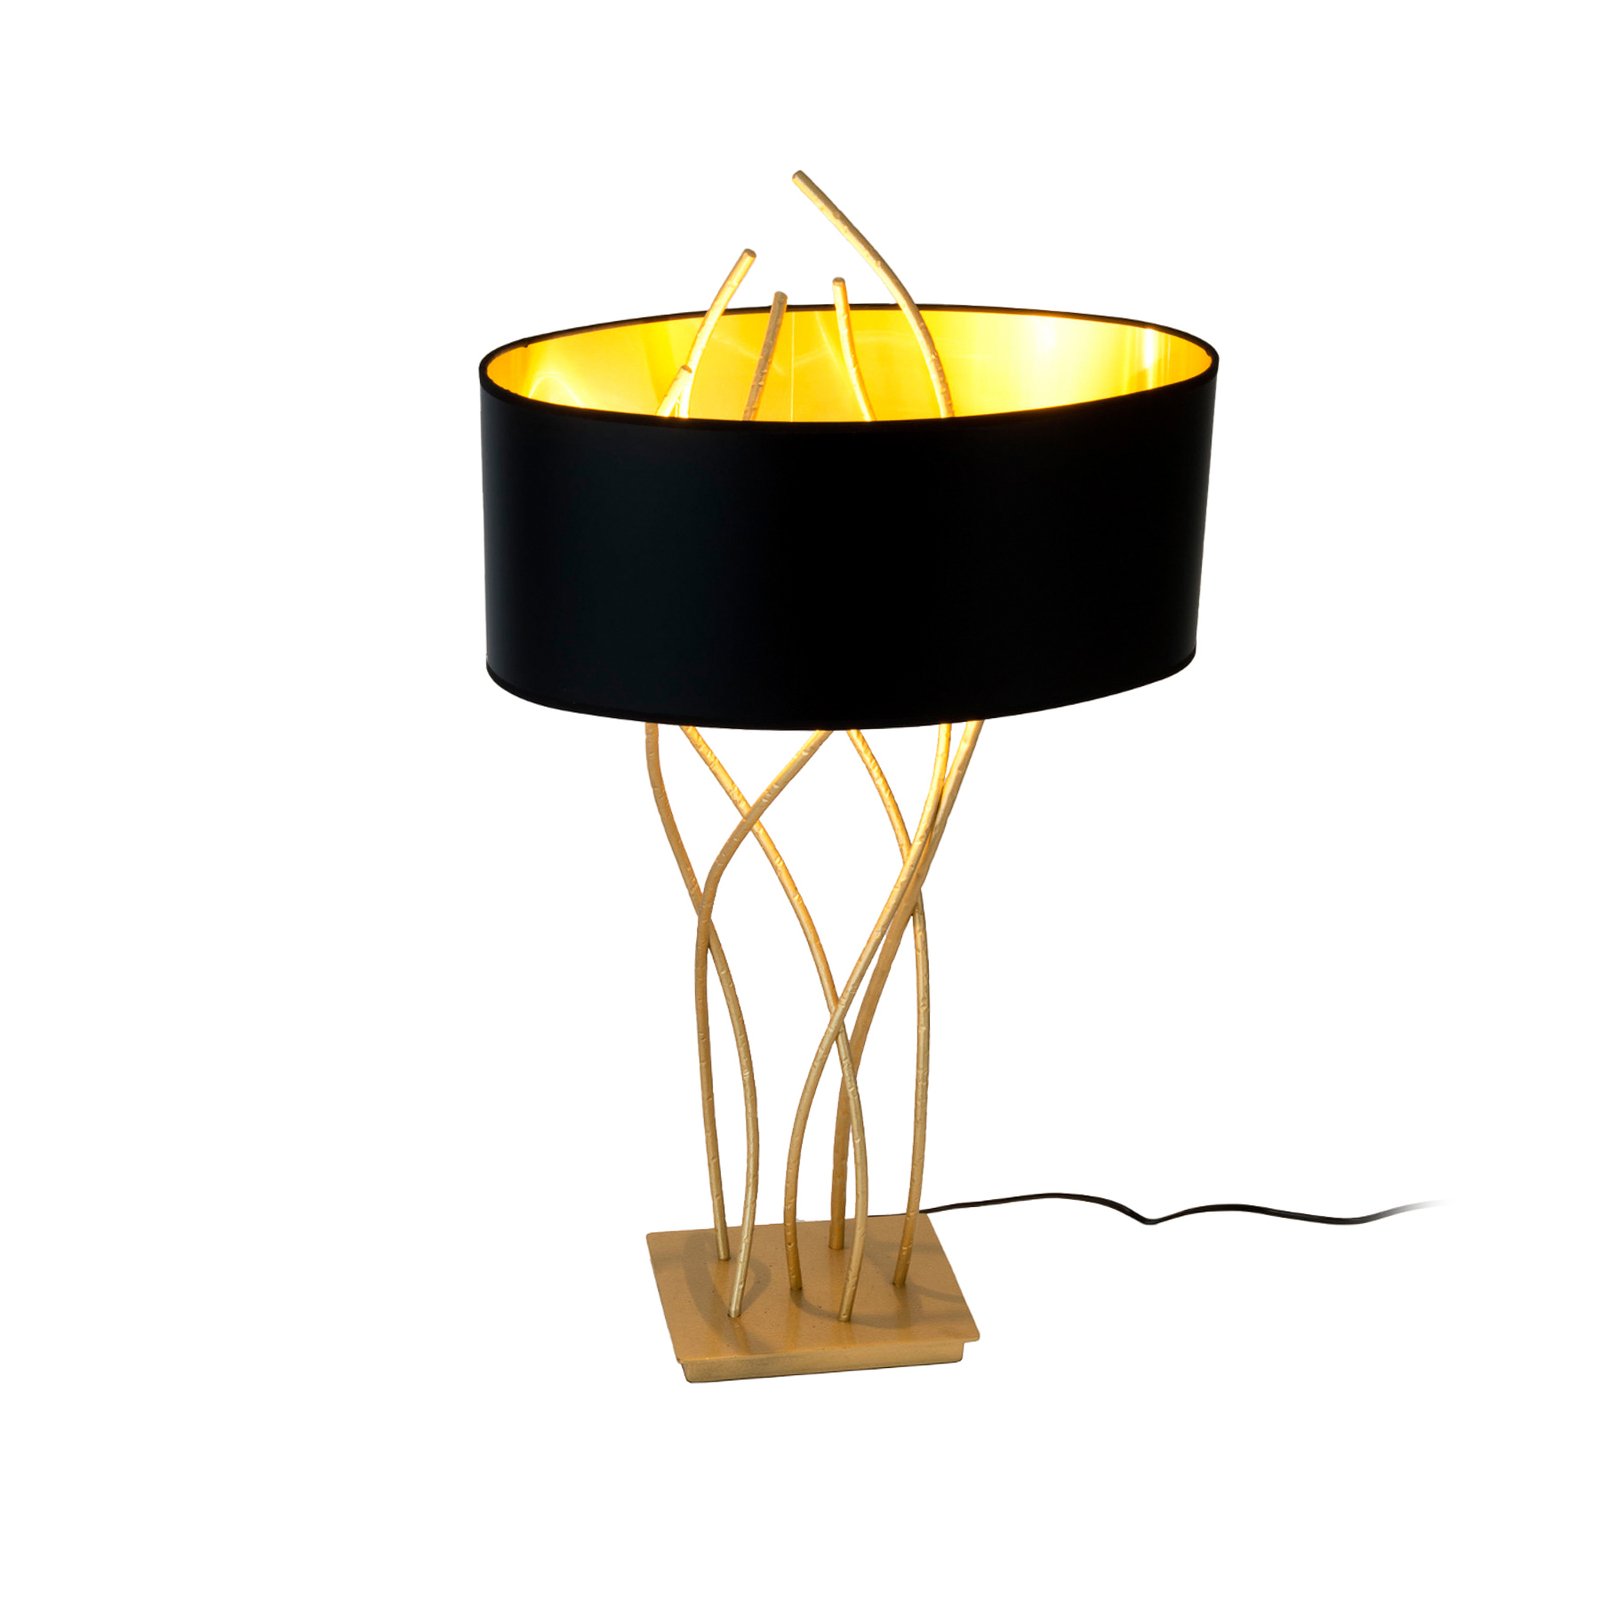 Elba oval table lamp, gold/black, height 75 cm, iron